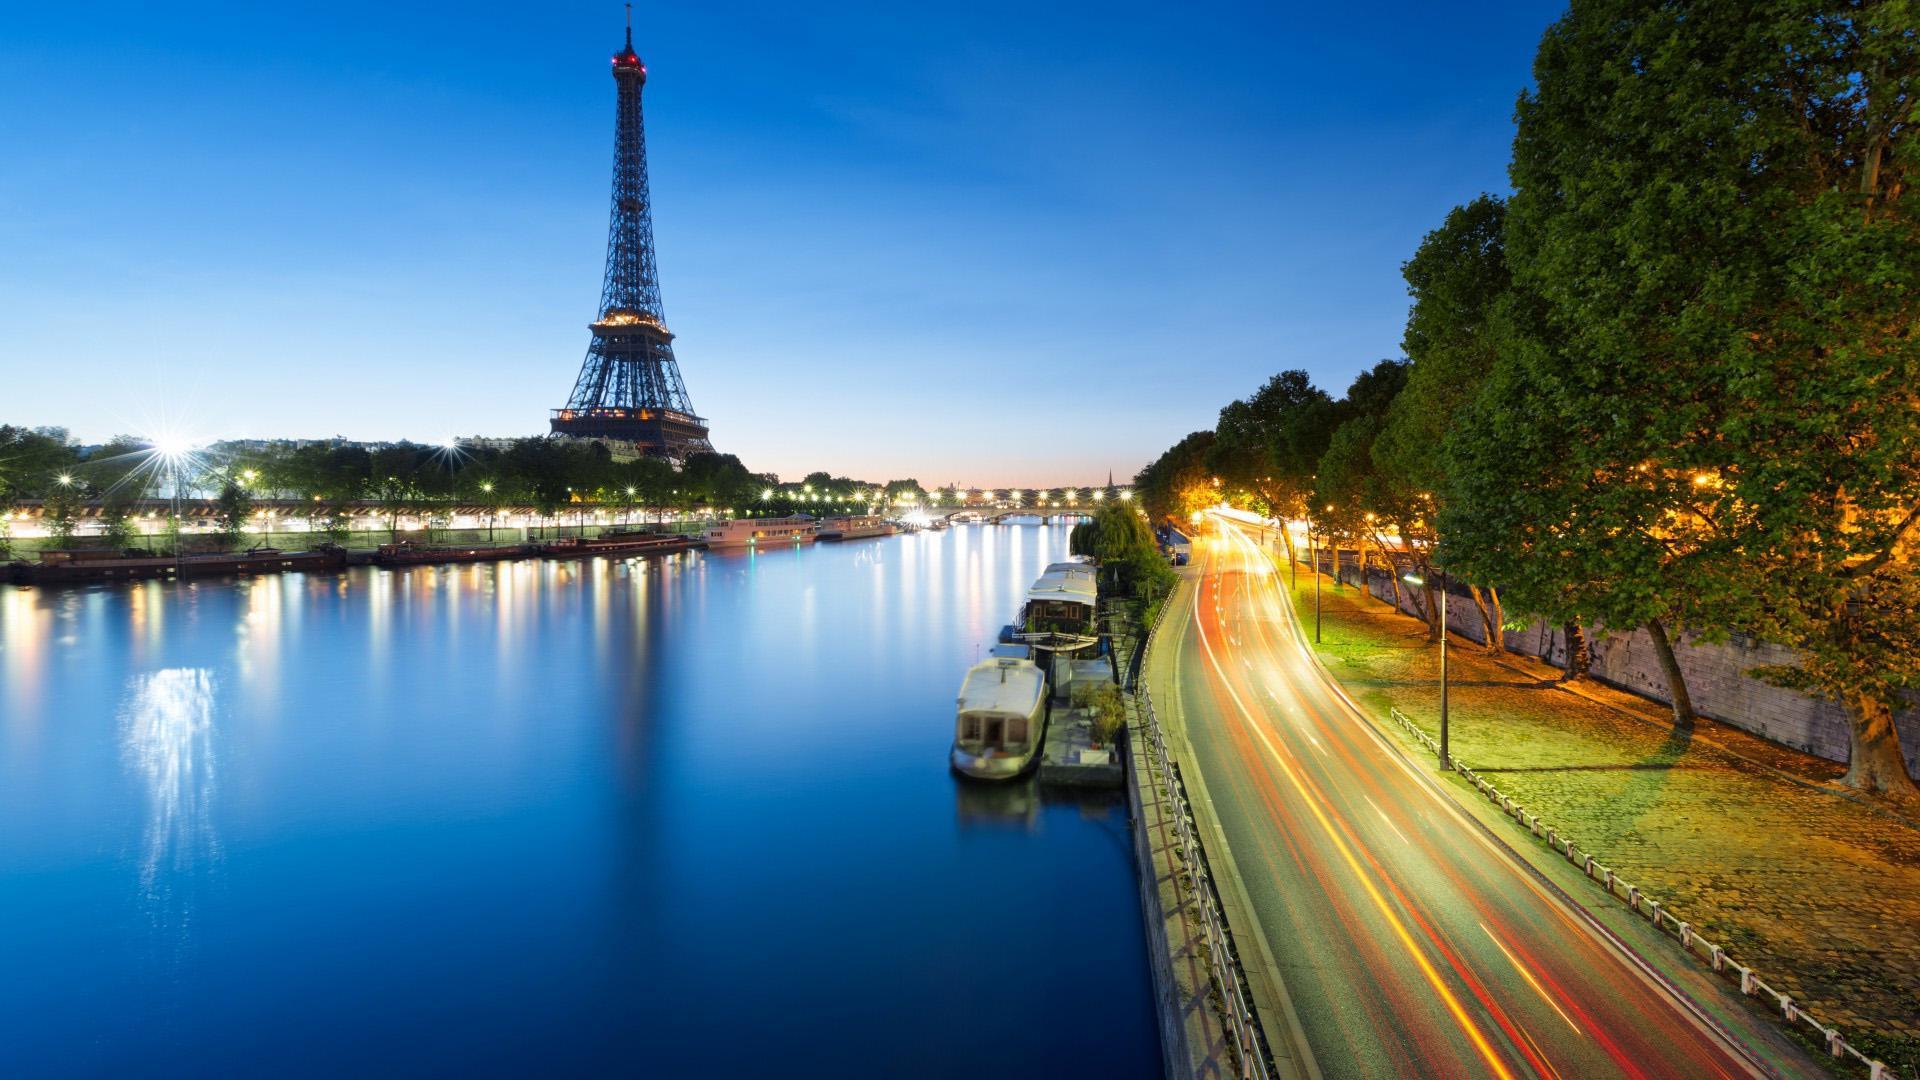 Hd Eiffel Tower In Paris, France Wallpaper - Прекрасная Франция - HD Wallpaper 